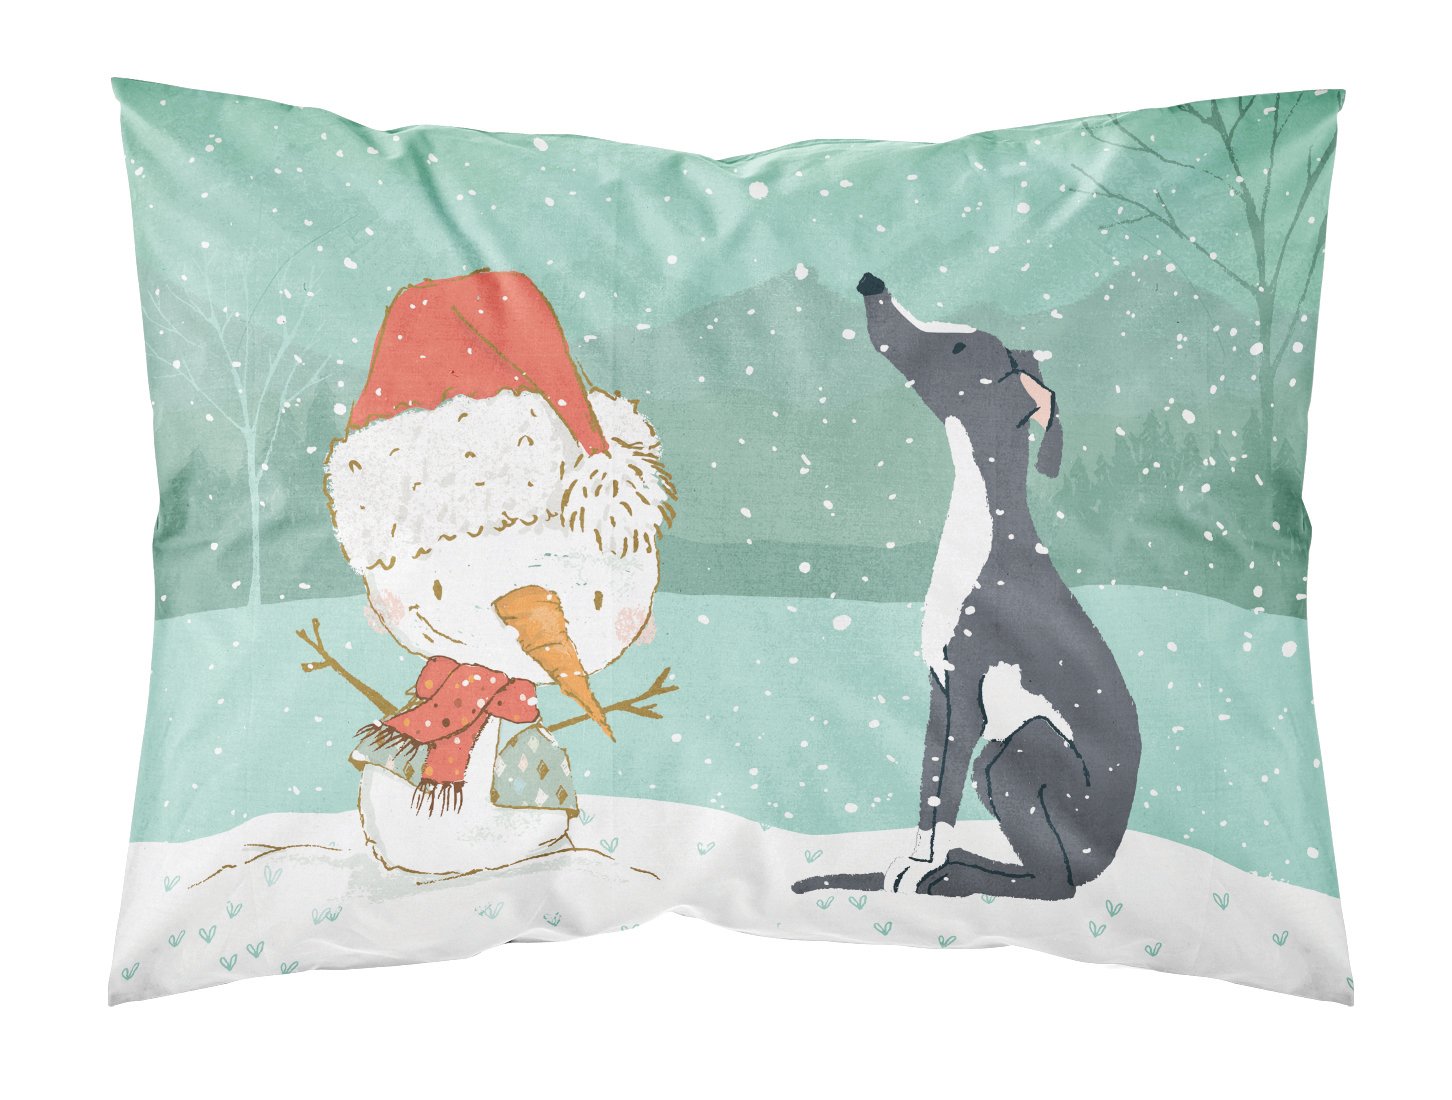 Black Greyhound Snowman Christmas Fabric Standard Pillowcase CK2044PILLOWCASE by Caroline's Treasures